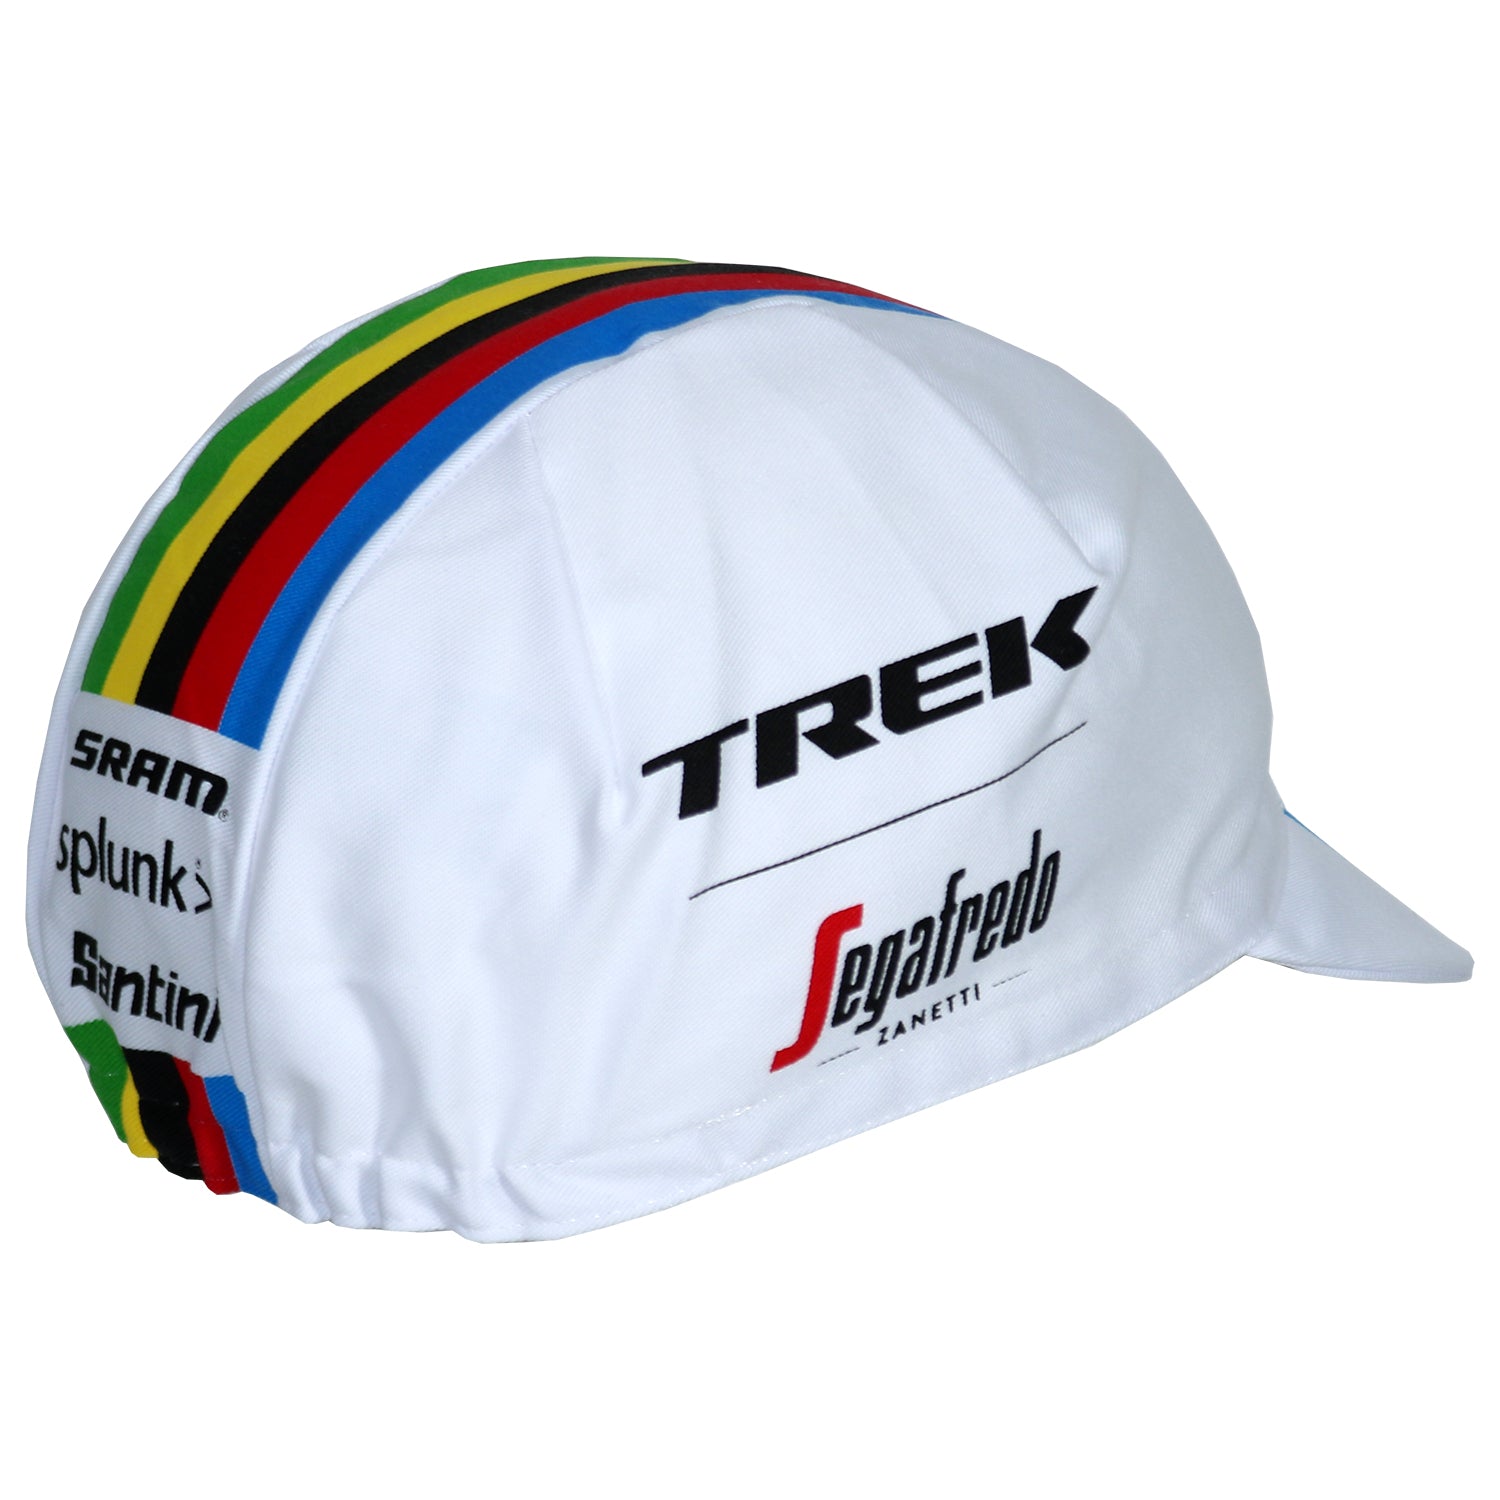 trek cycling hat